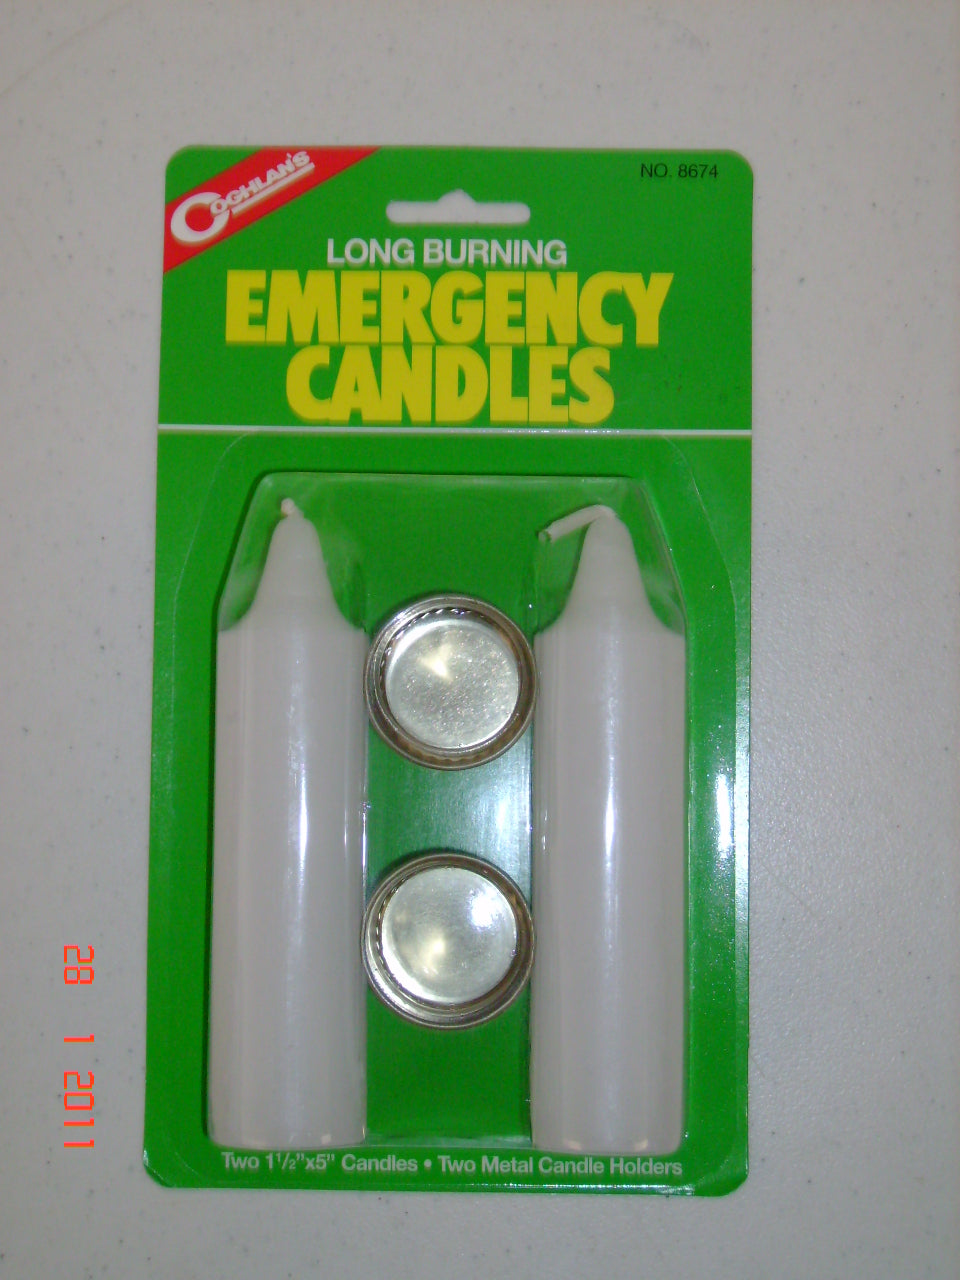 Coghlan 1 1/2" x 5" Emergency Candles